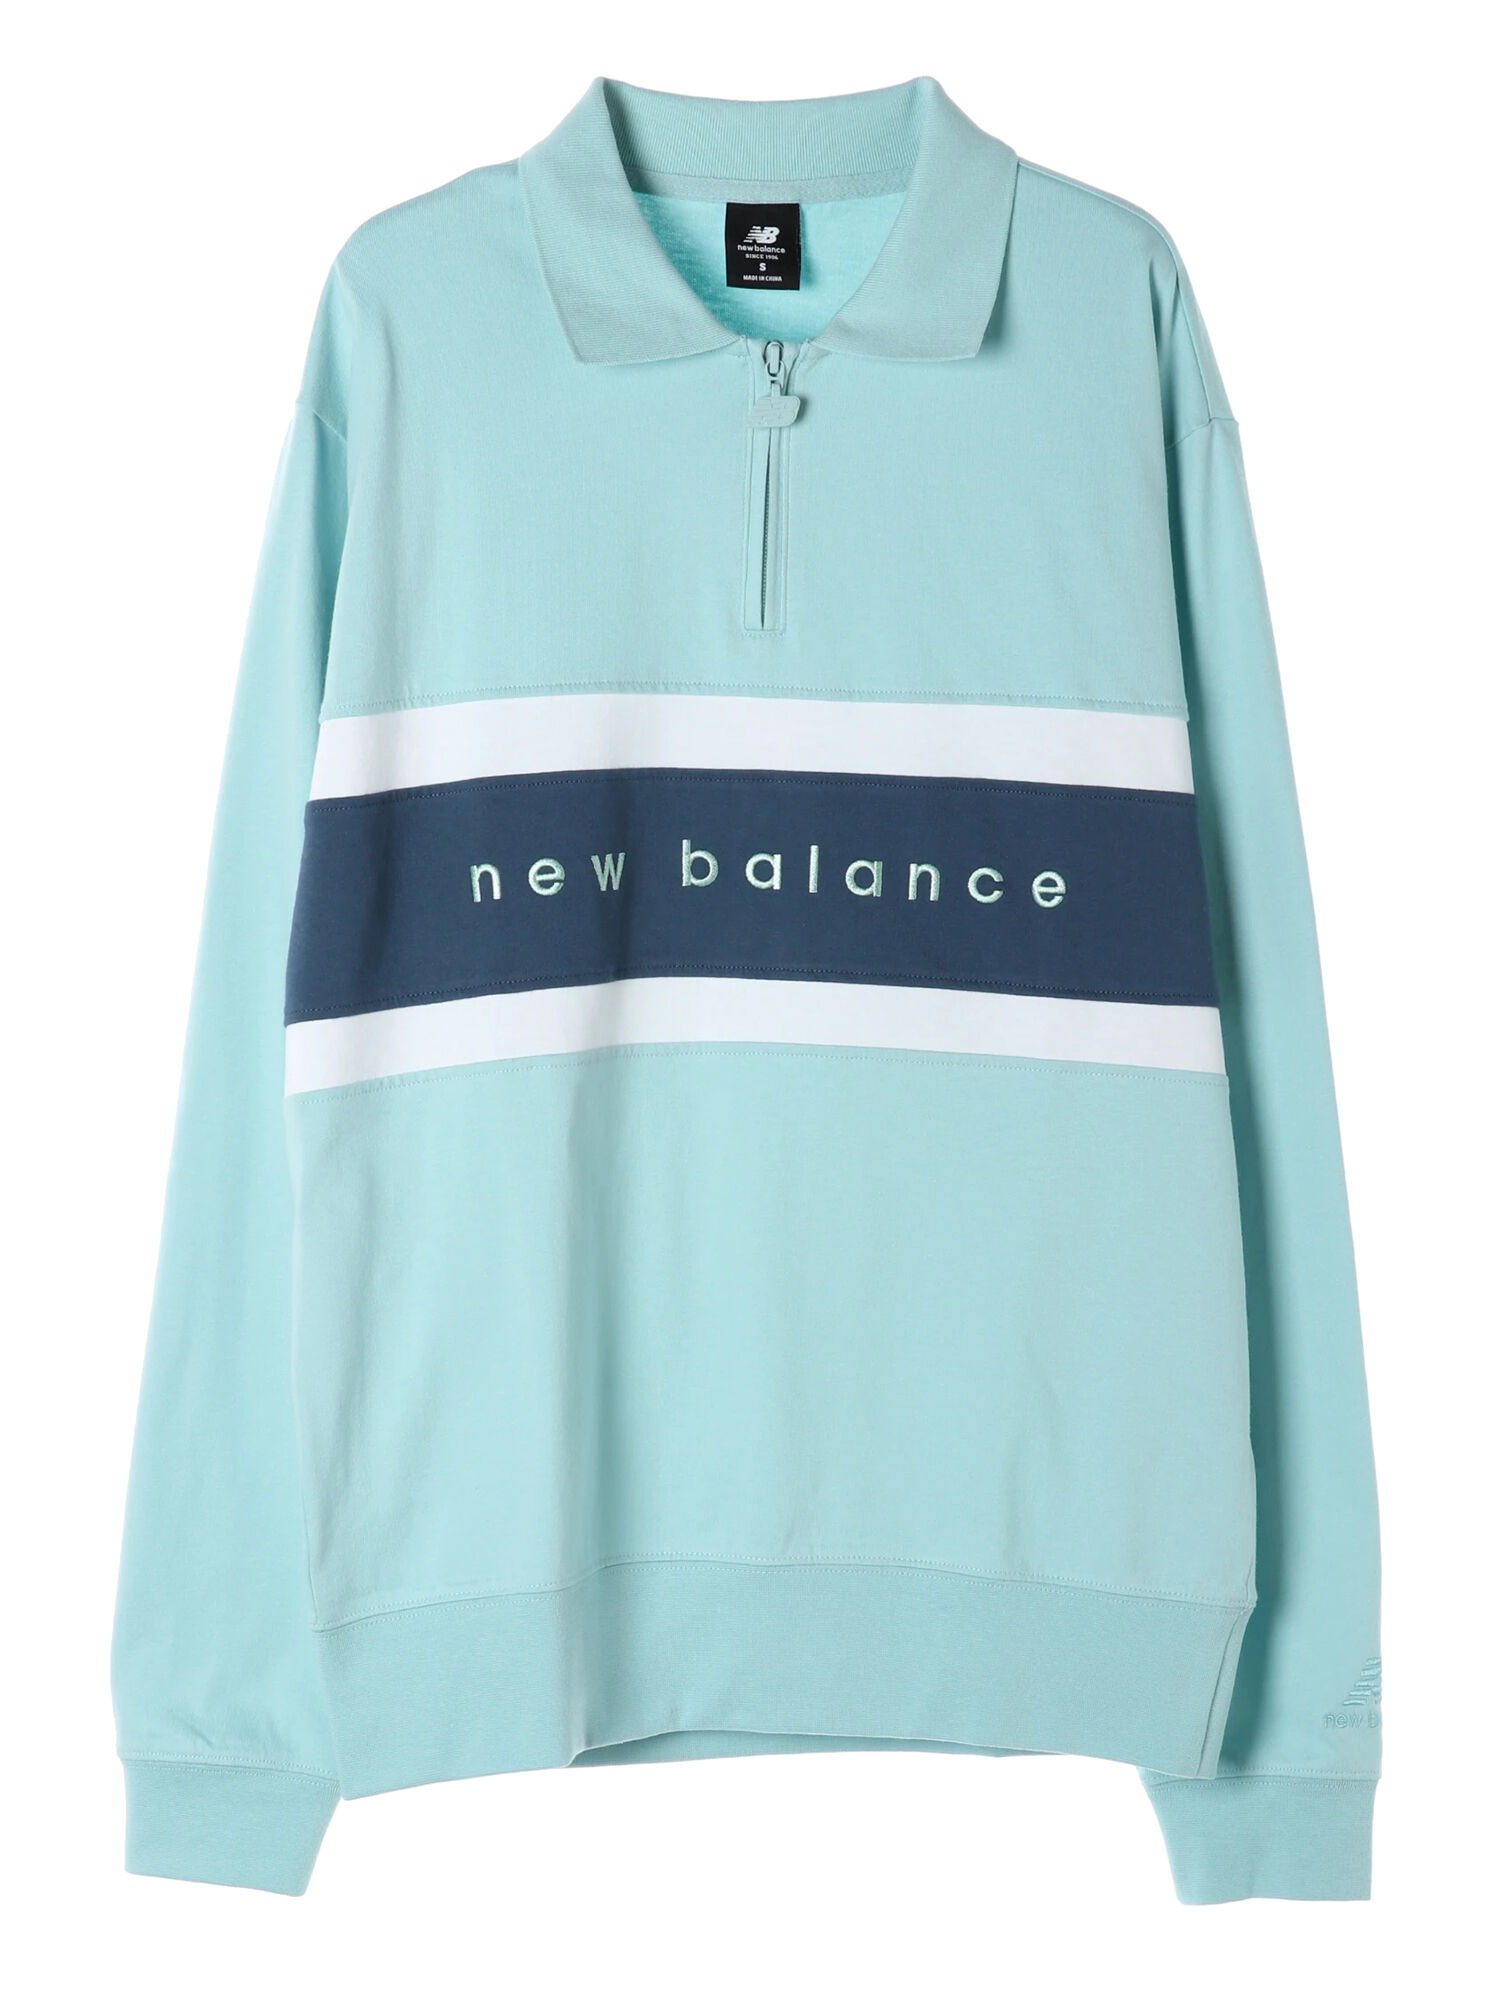 New Balance】プレップラグビーシャツ（ライトブルー/ネイビー